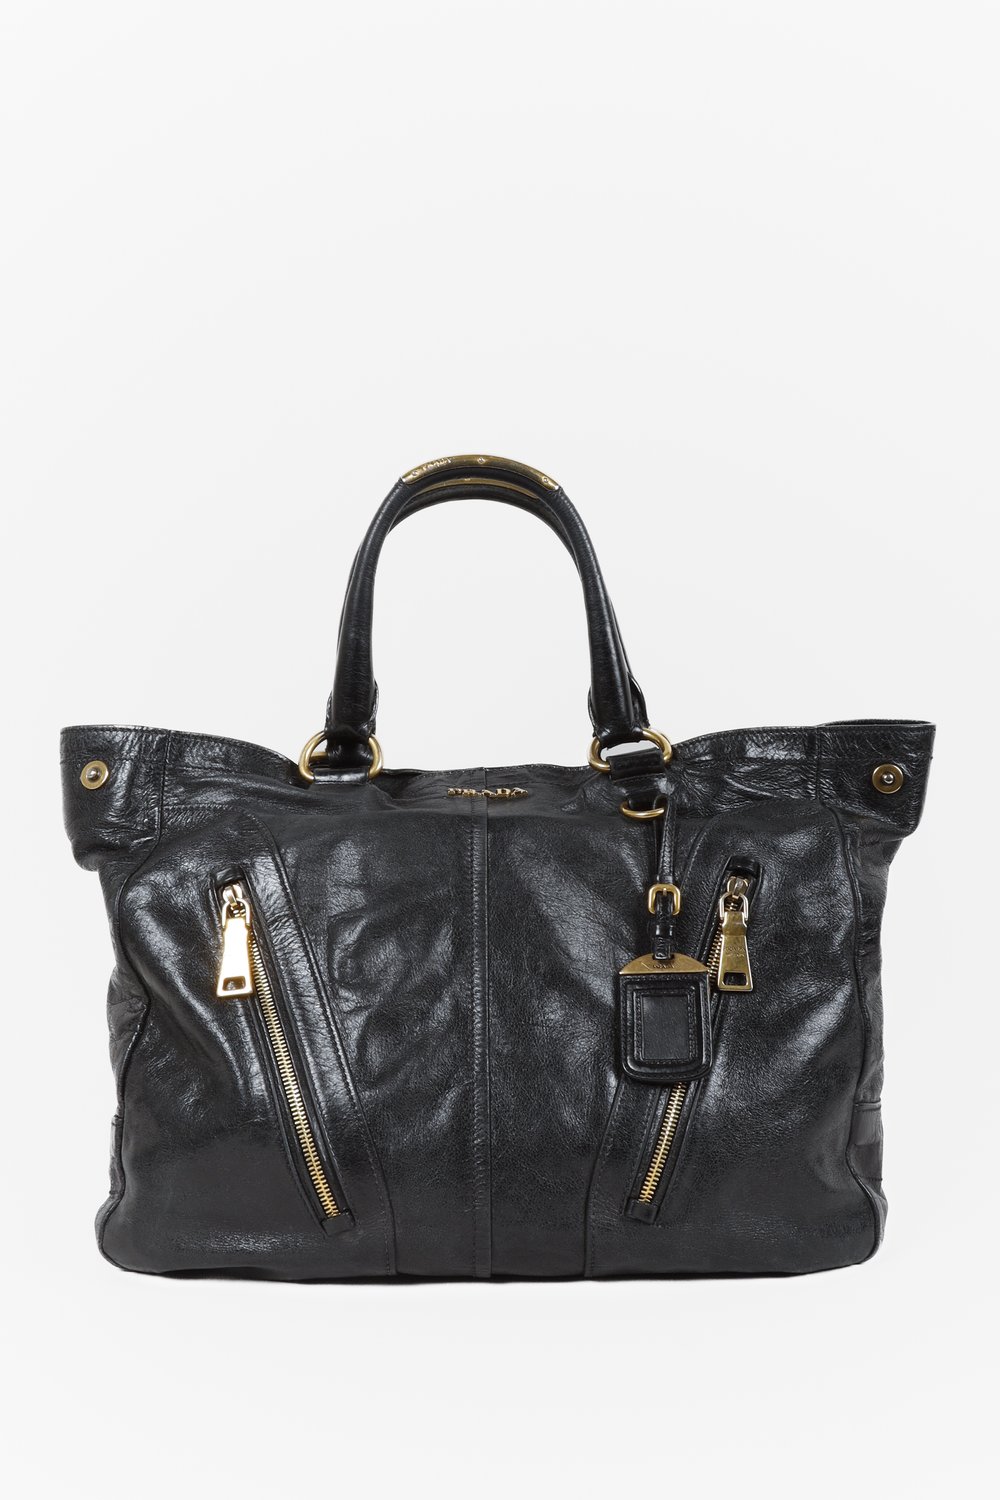 Prada Black Vitello Shine Zippy Tote Bag Leather Pony-style